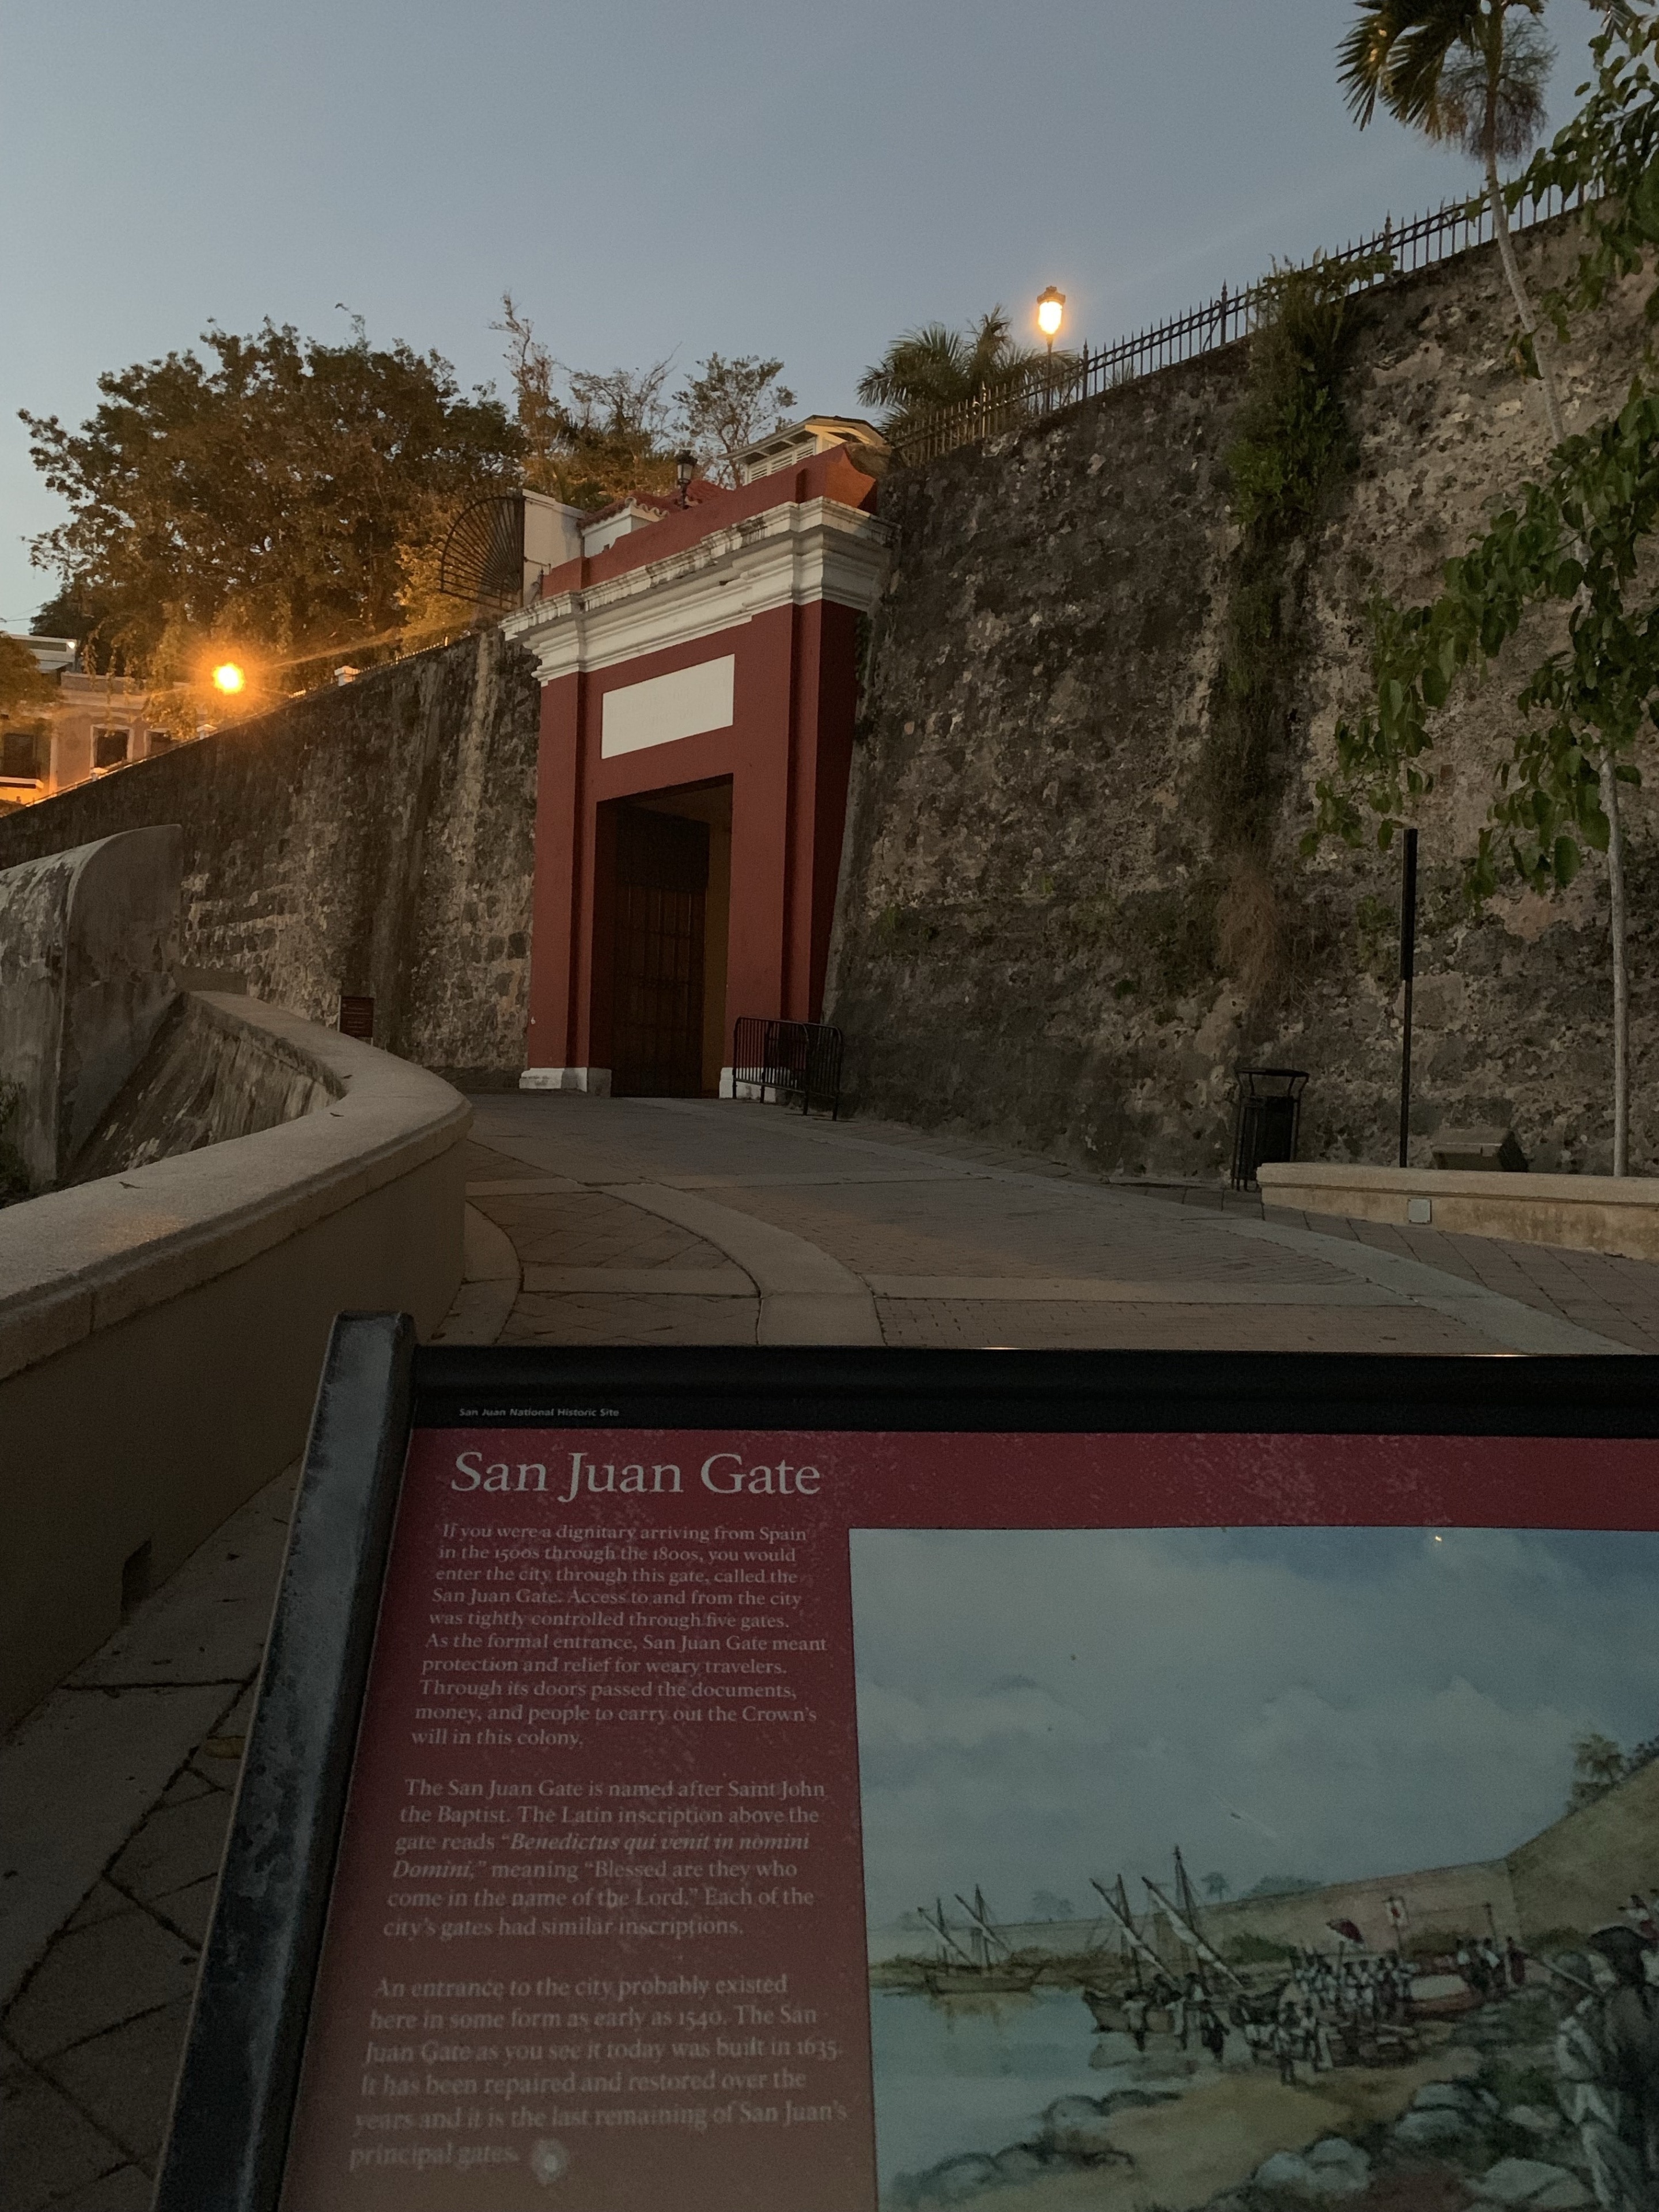 San Juan Gate
Old San Juan 
Puerto Rico